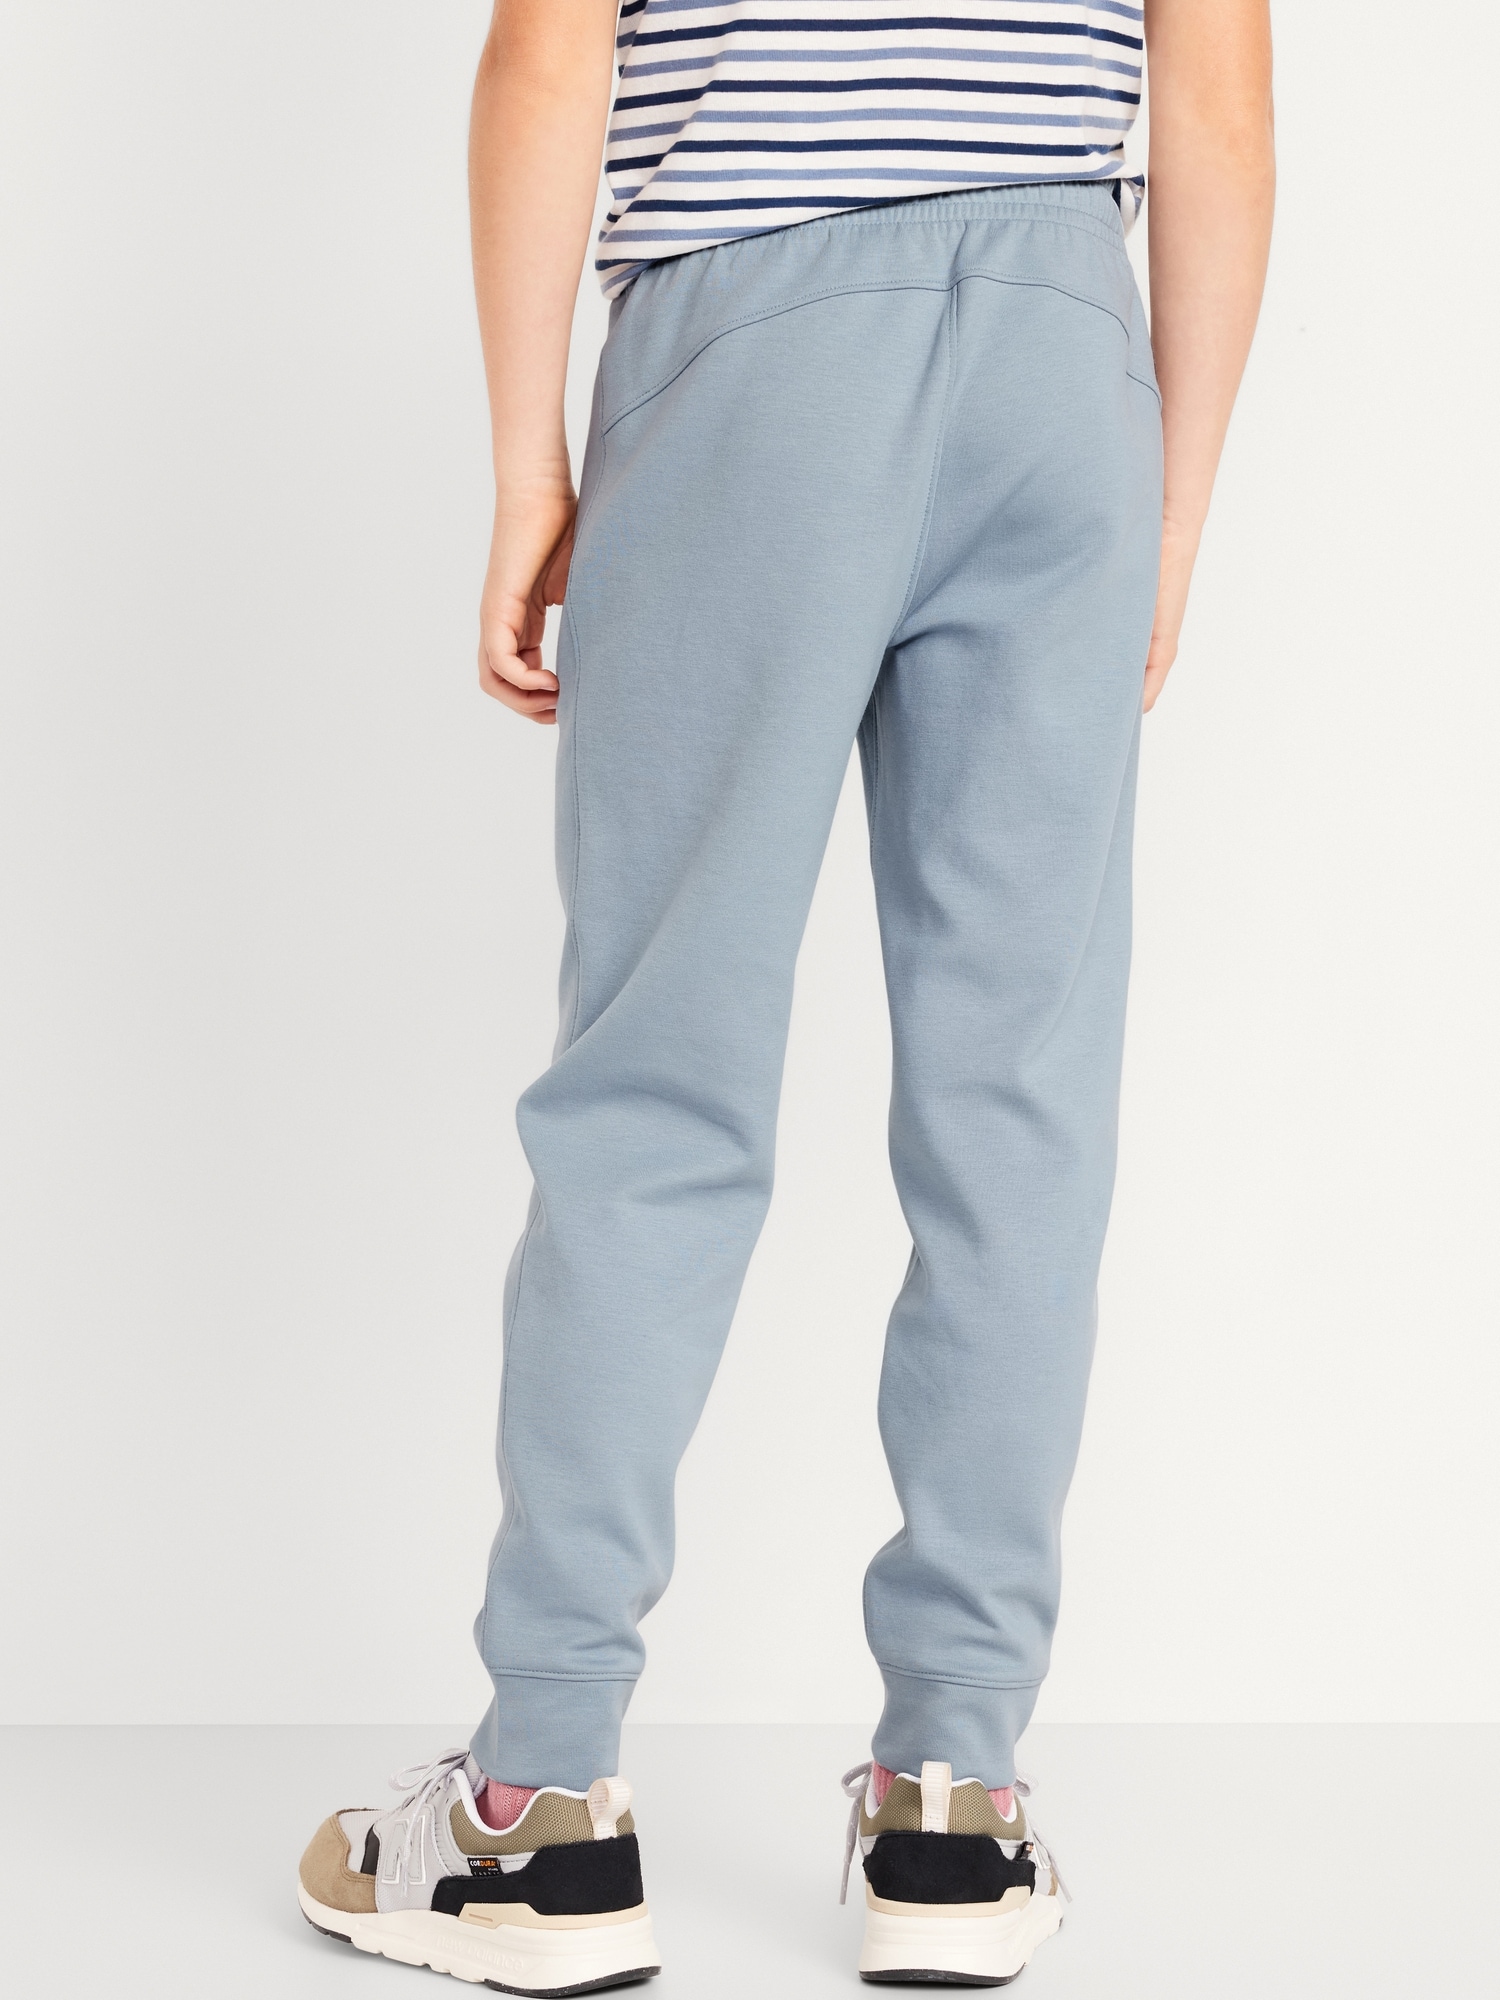 Boys' Sweatpants - Basic Active Fleece Joggers (Size: 8-18), Size 10/12,  Black/Red/White 